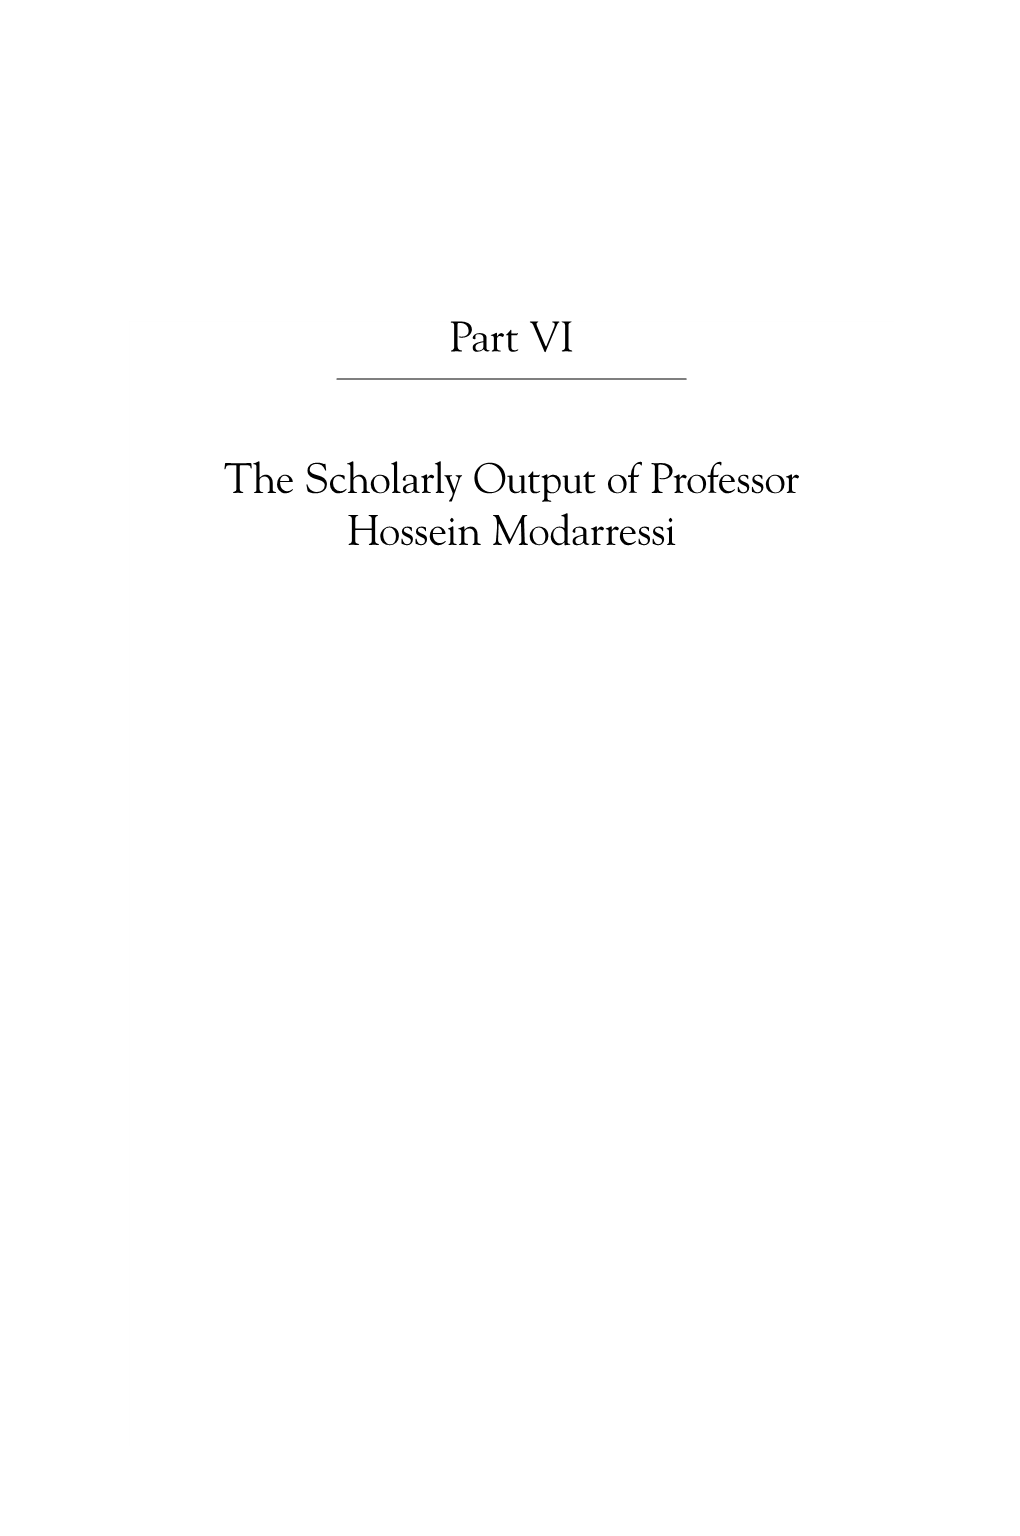 Part VI the Scholarly Output of Professor Hossein Modarressi